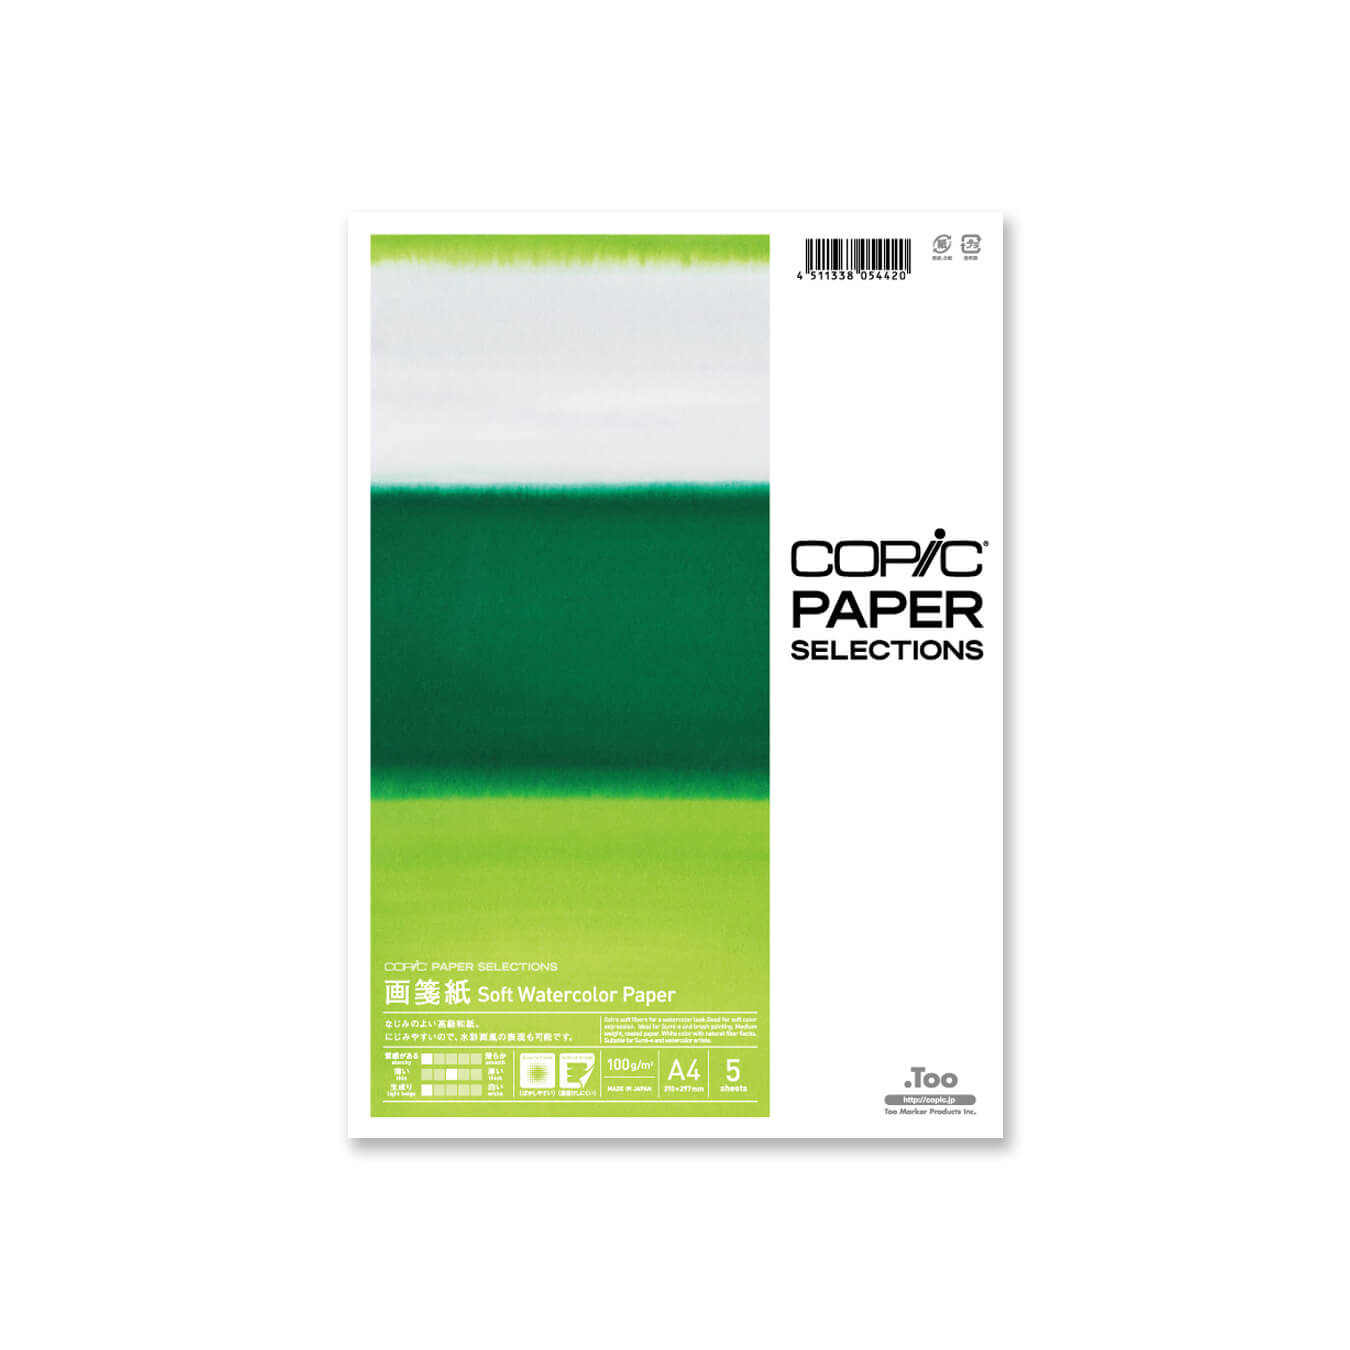 Copic Paper Selections - Gasen-Shi Soft Watercolor Paper A4, 5Pcs